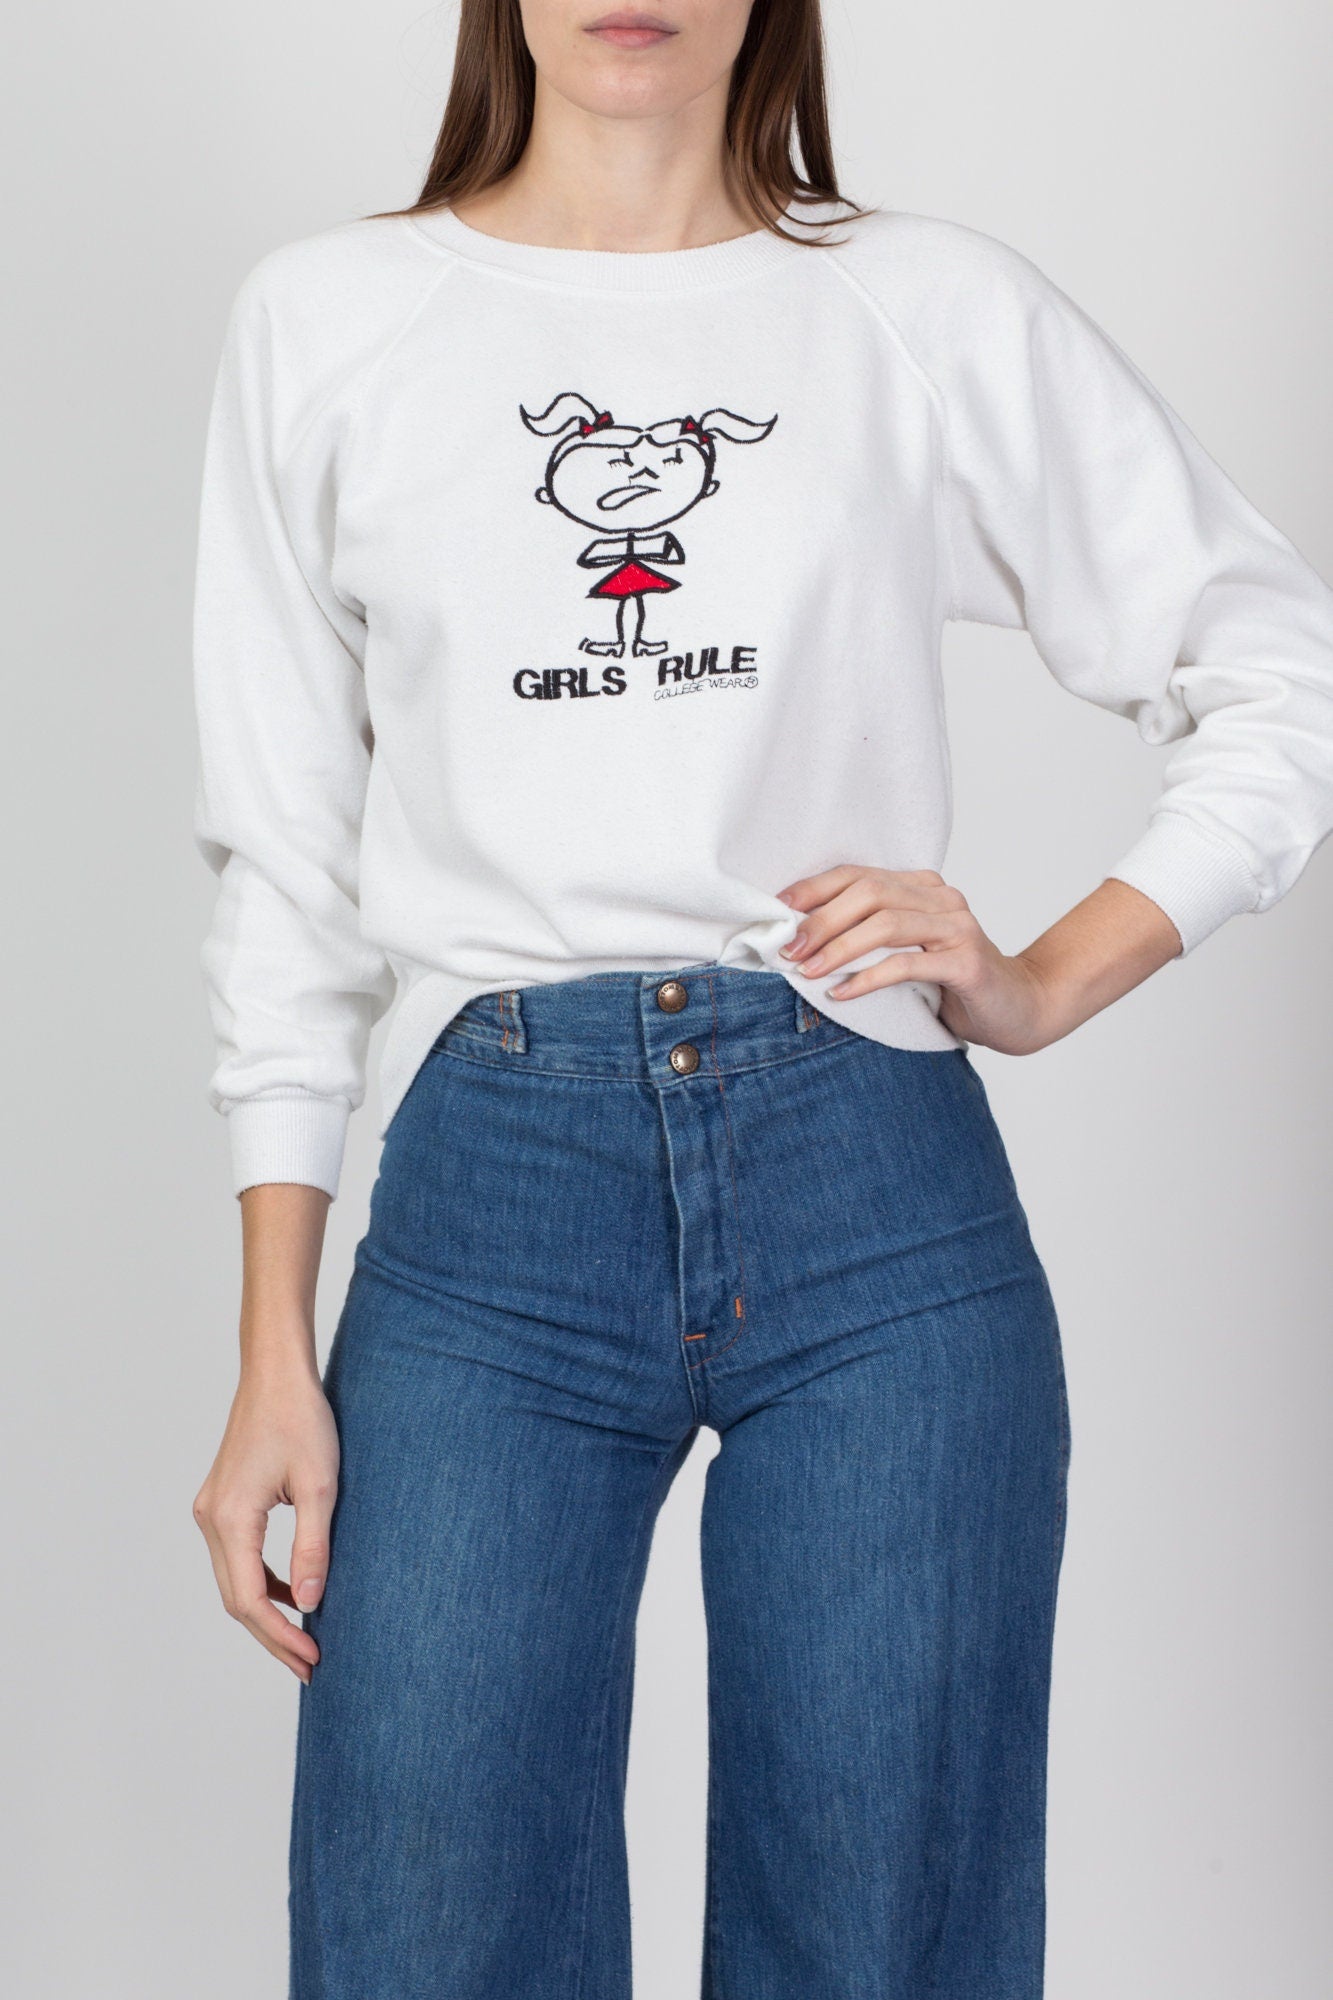 90s Y2K "Girls Rule" Sweatshirt - Petite Small 